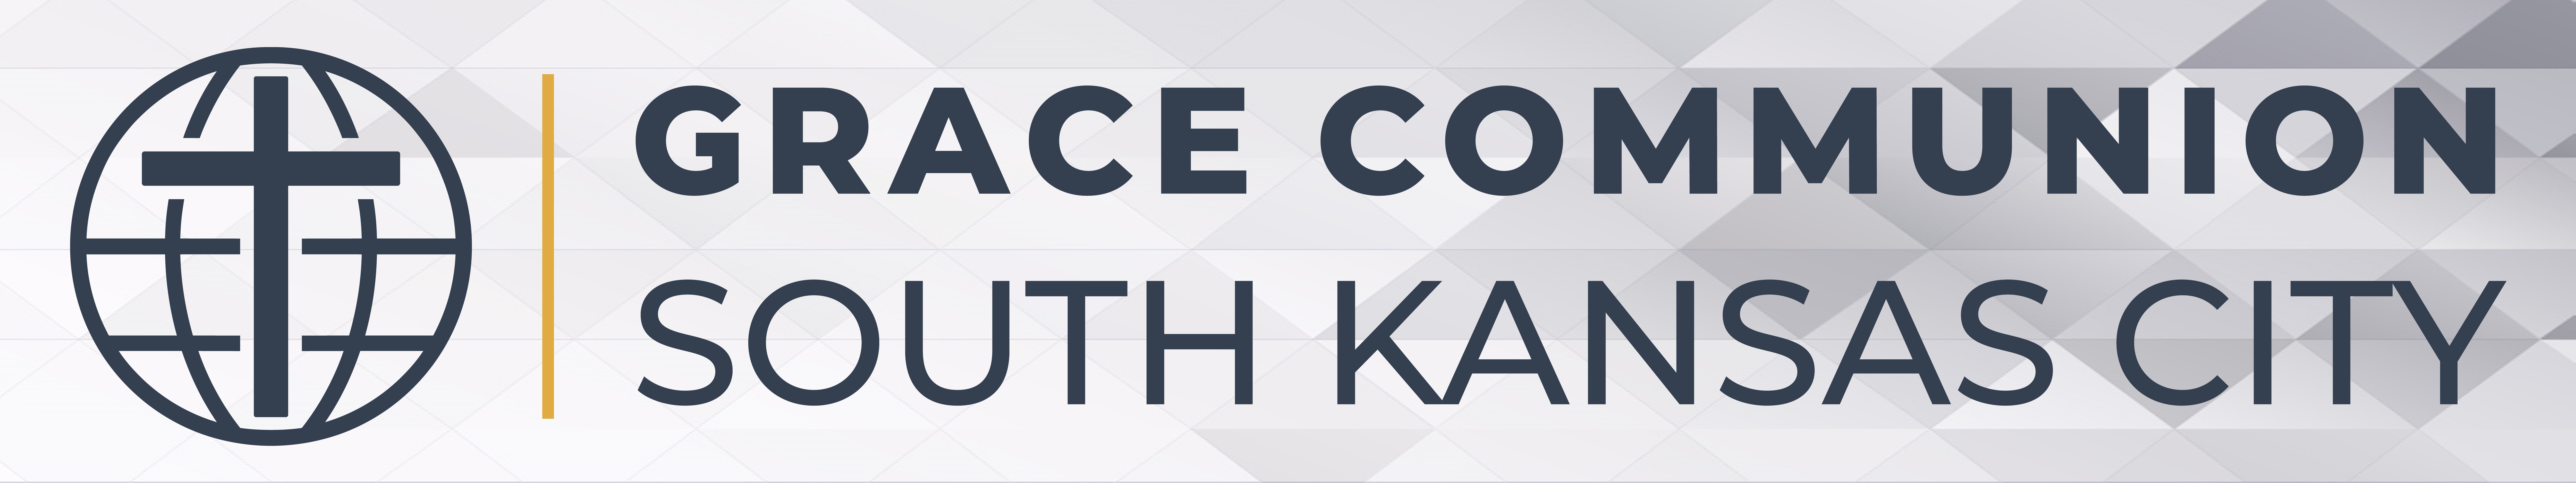 Grace Communion South Kansas City Logo